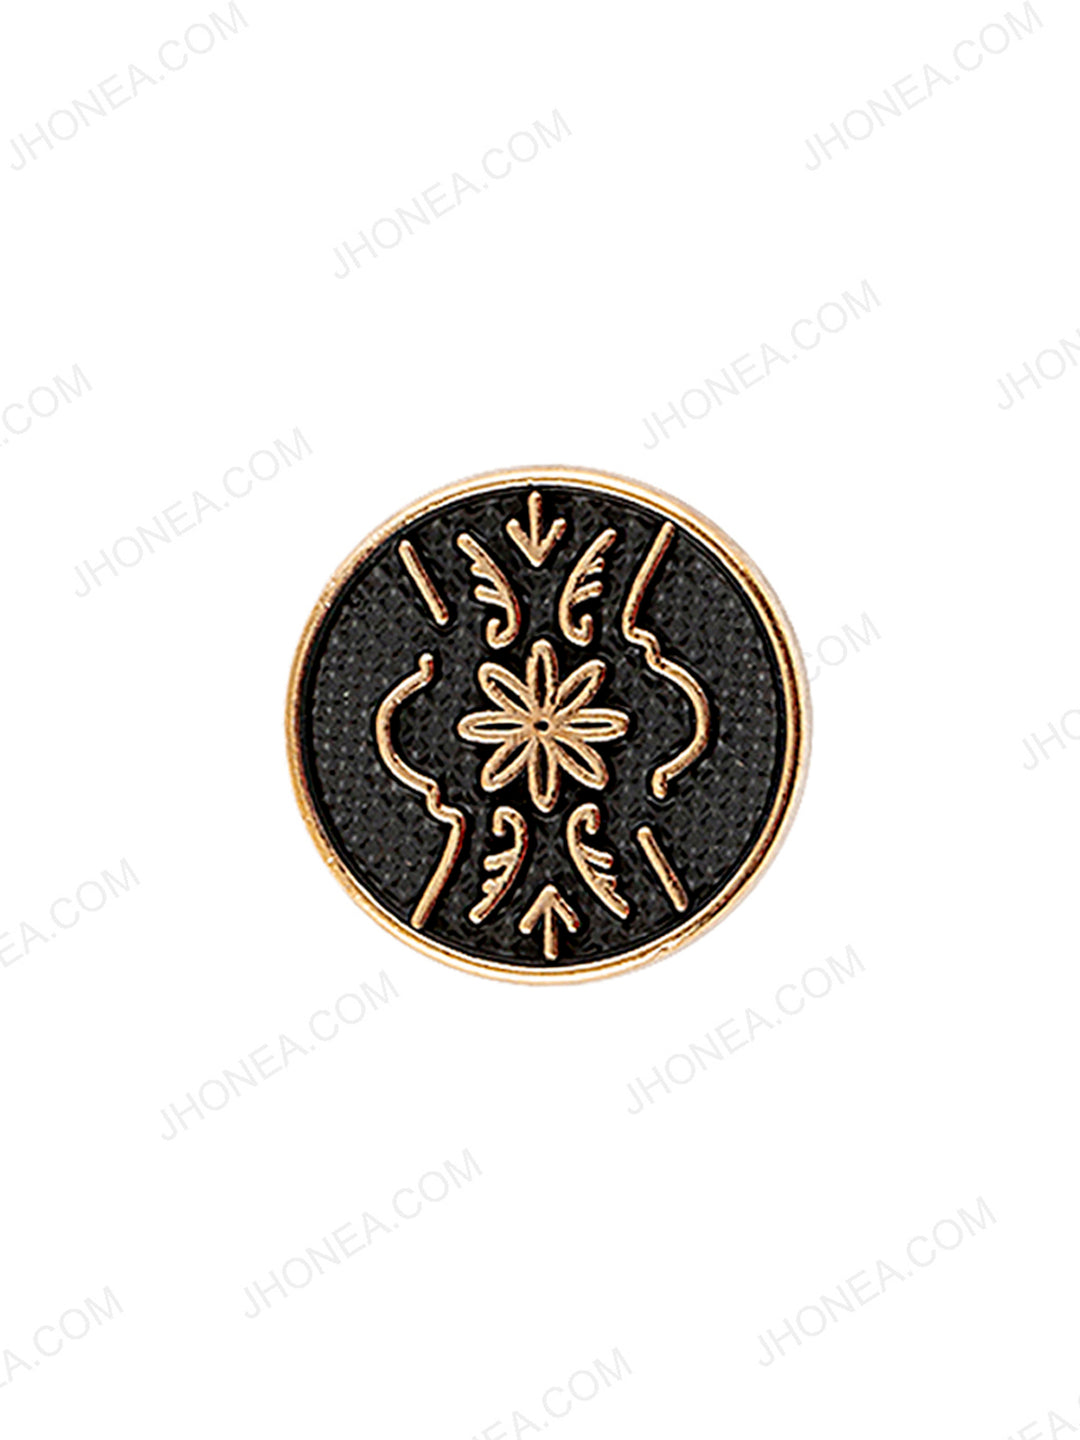 Golden with Black Matte Gold Engraved Design Coat Button